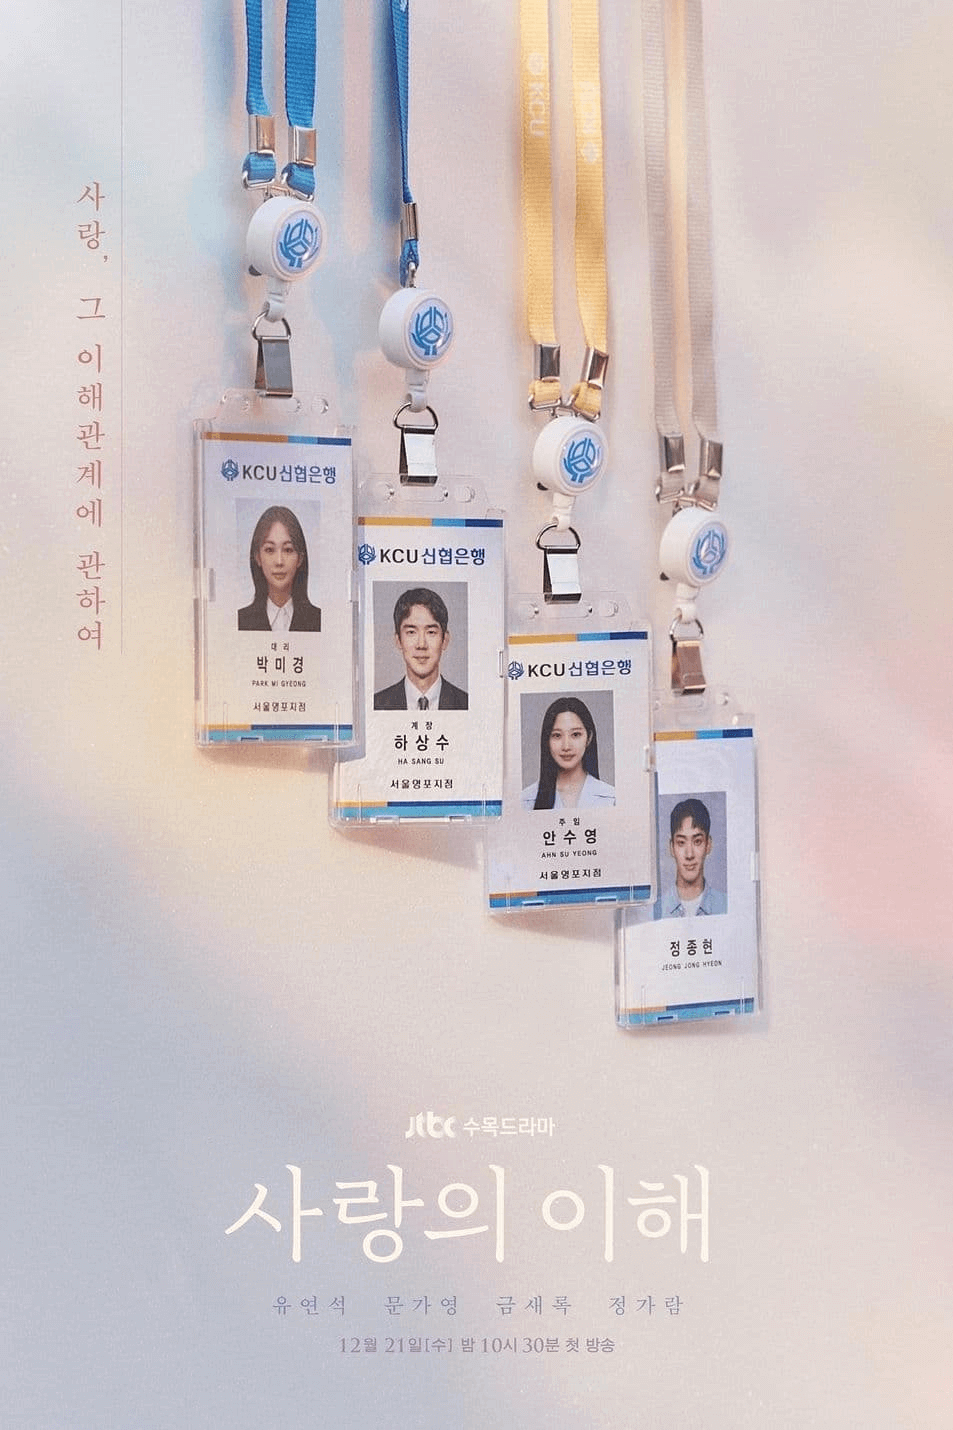 el interés del amor netflix k drama temporada 1 se lanzará en el póster de netflix en diciembre de 2022